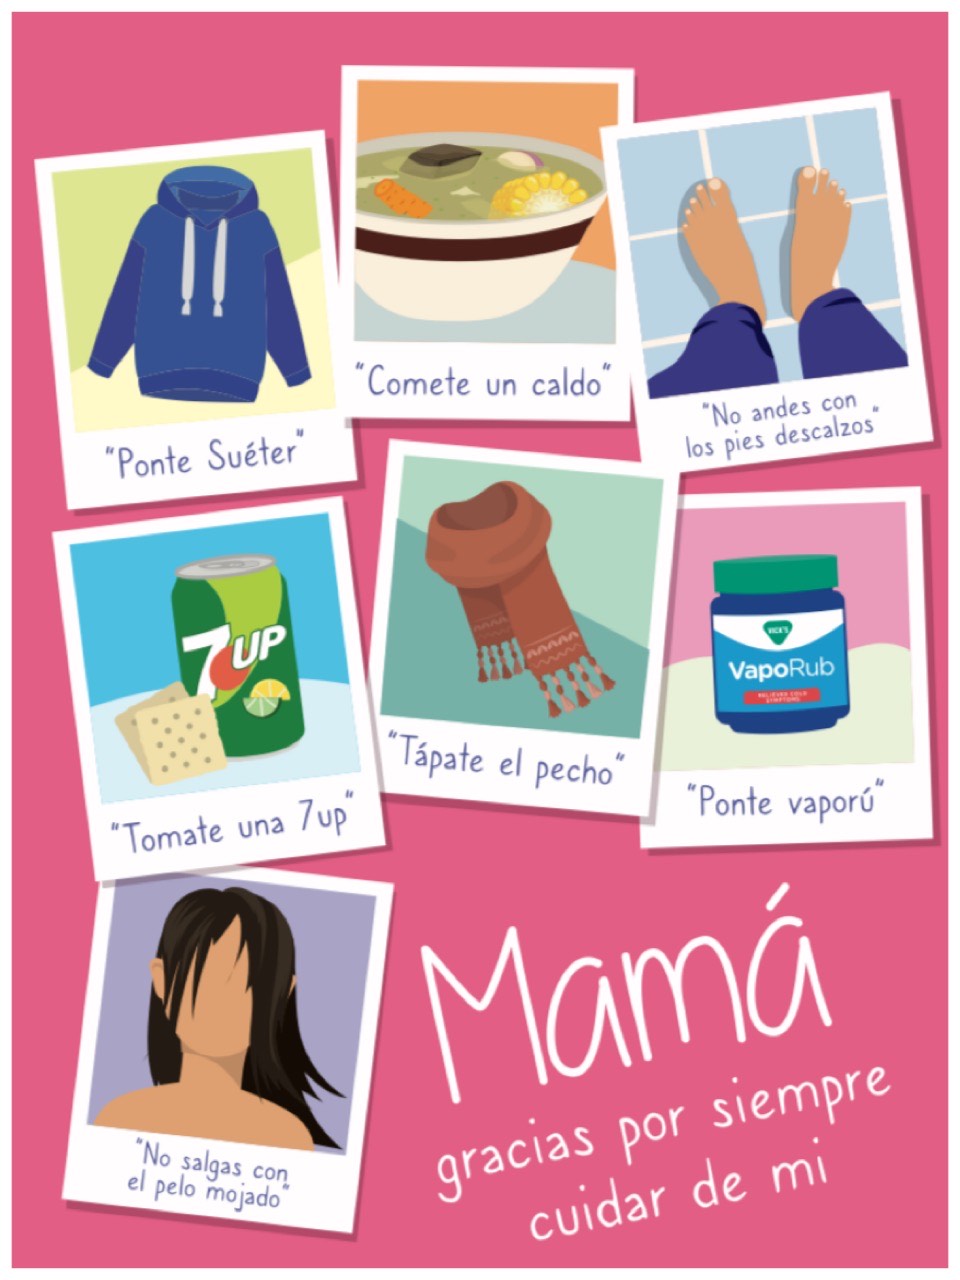 Mothers Day Card Cuidar De Mi